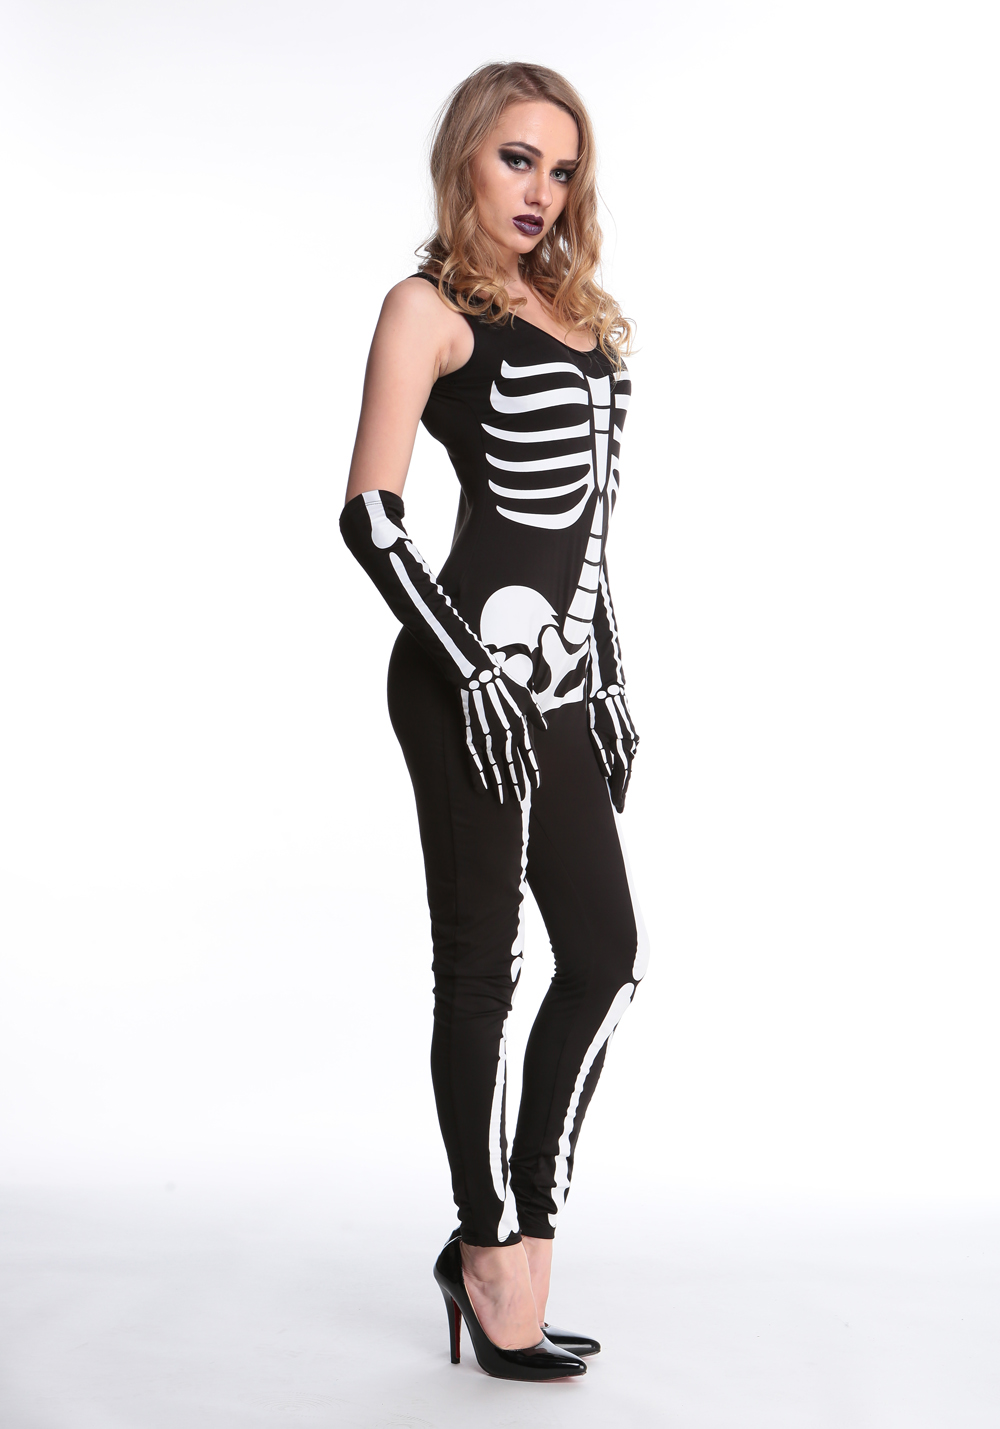 F1731 skeleton halloween costume catsuit